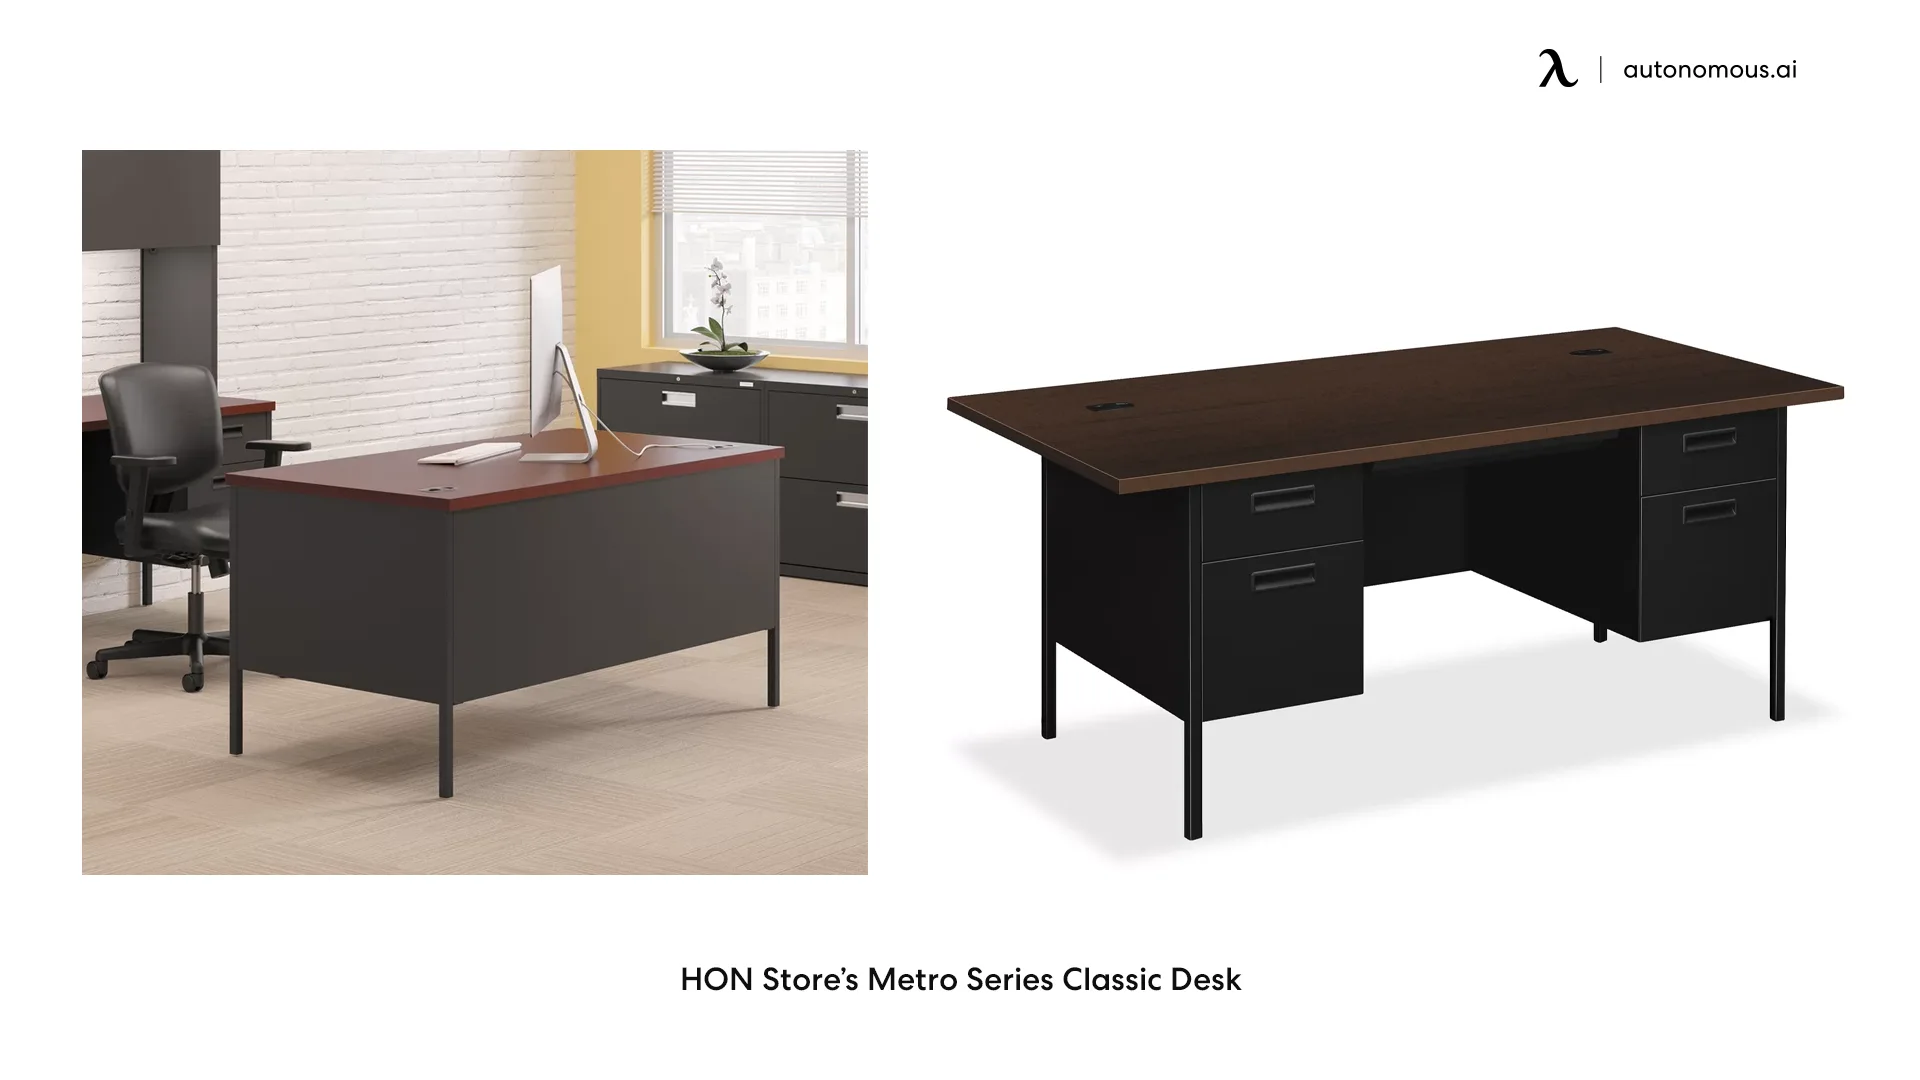 HON Store’s Metro Series Classic 60-inch desk